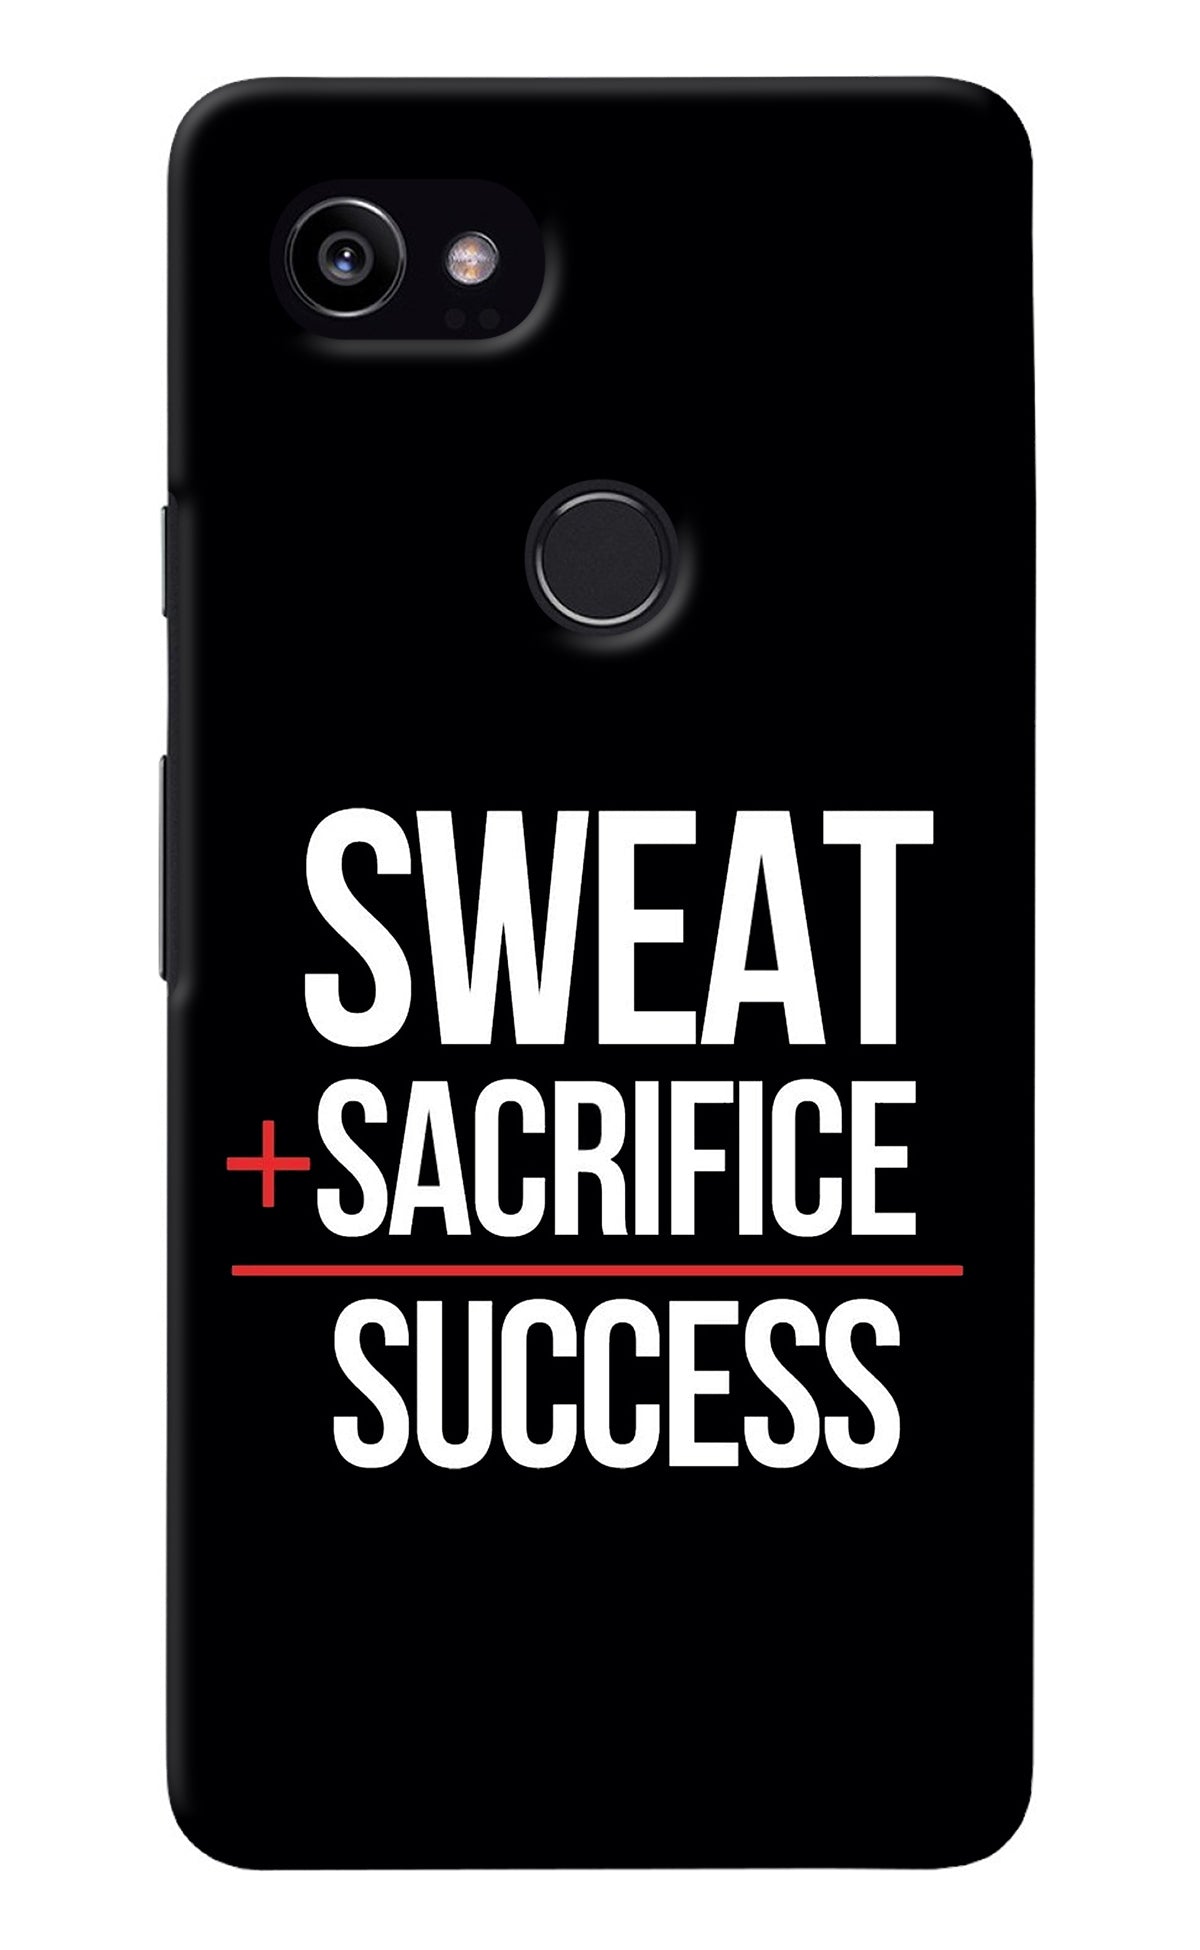 Sweat Sacrifice Success Google Pixel 2 XL Back Cover